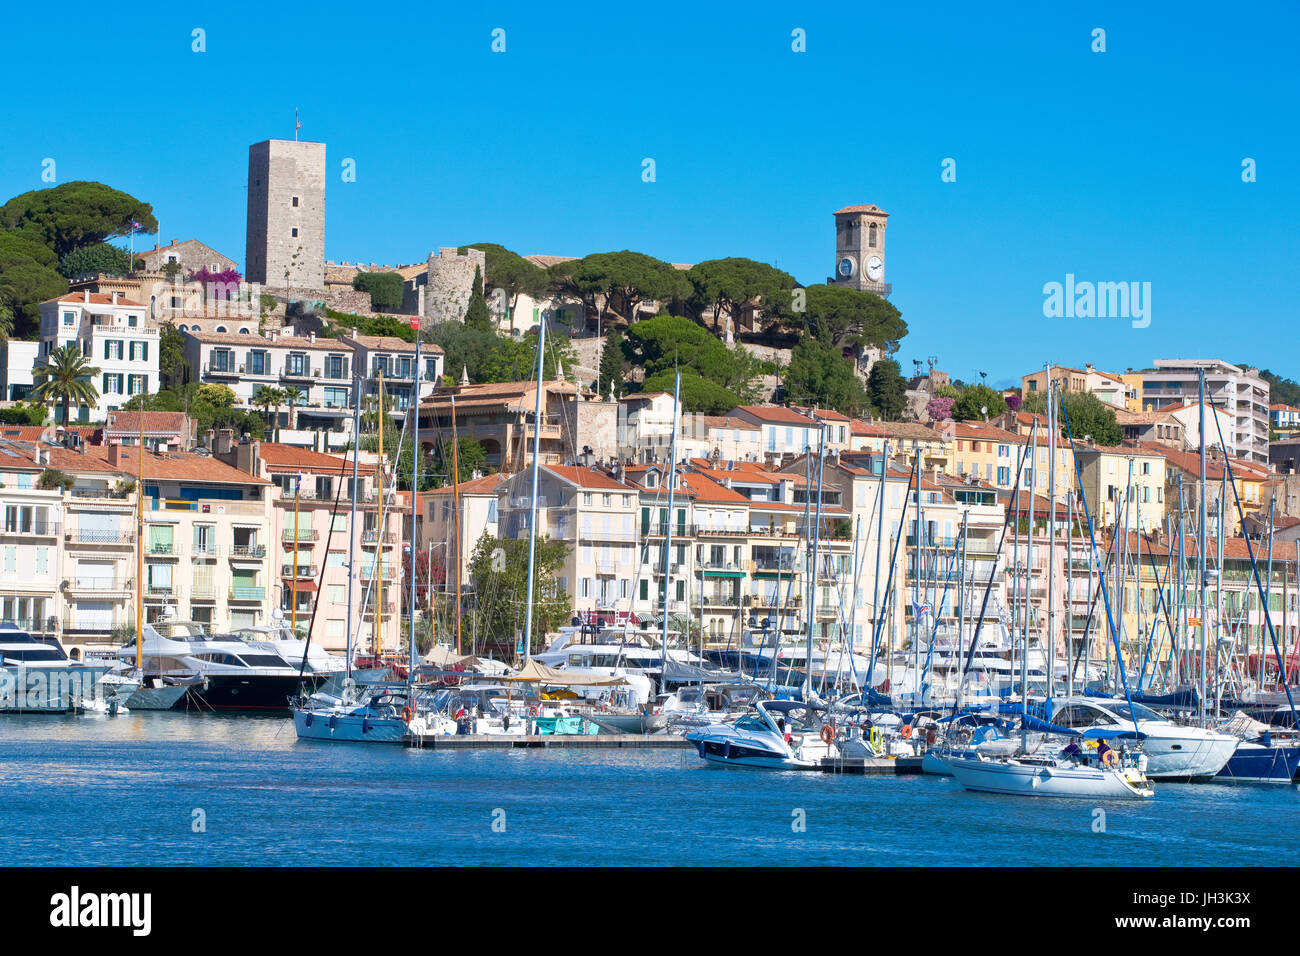 Old port, Le Suquet, Cannes, France Stock Photo